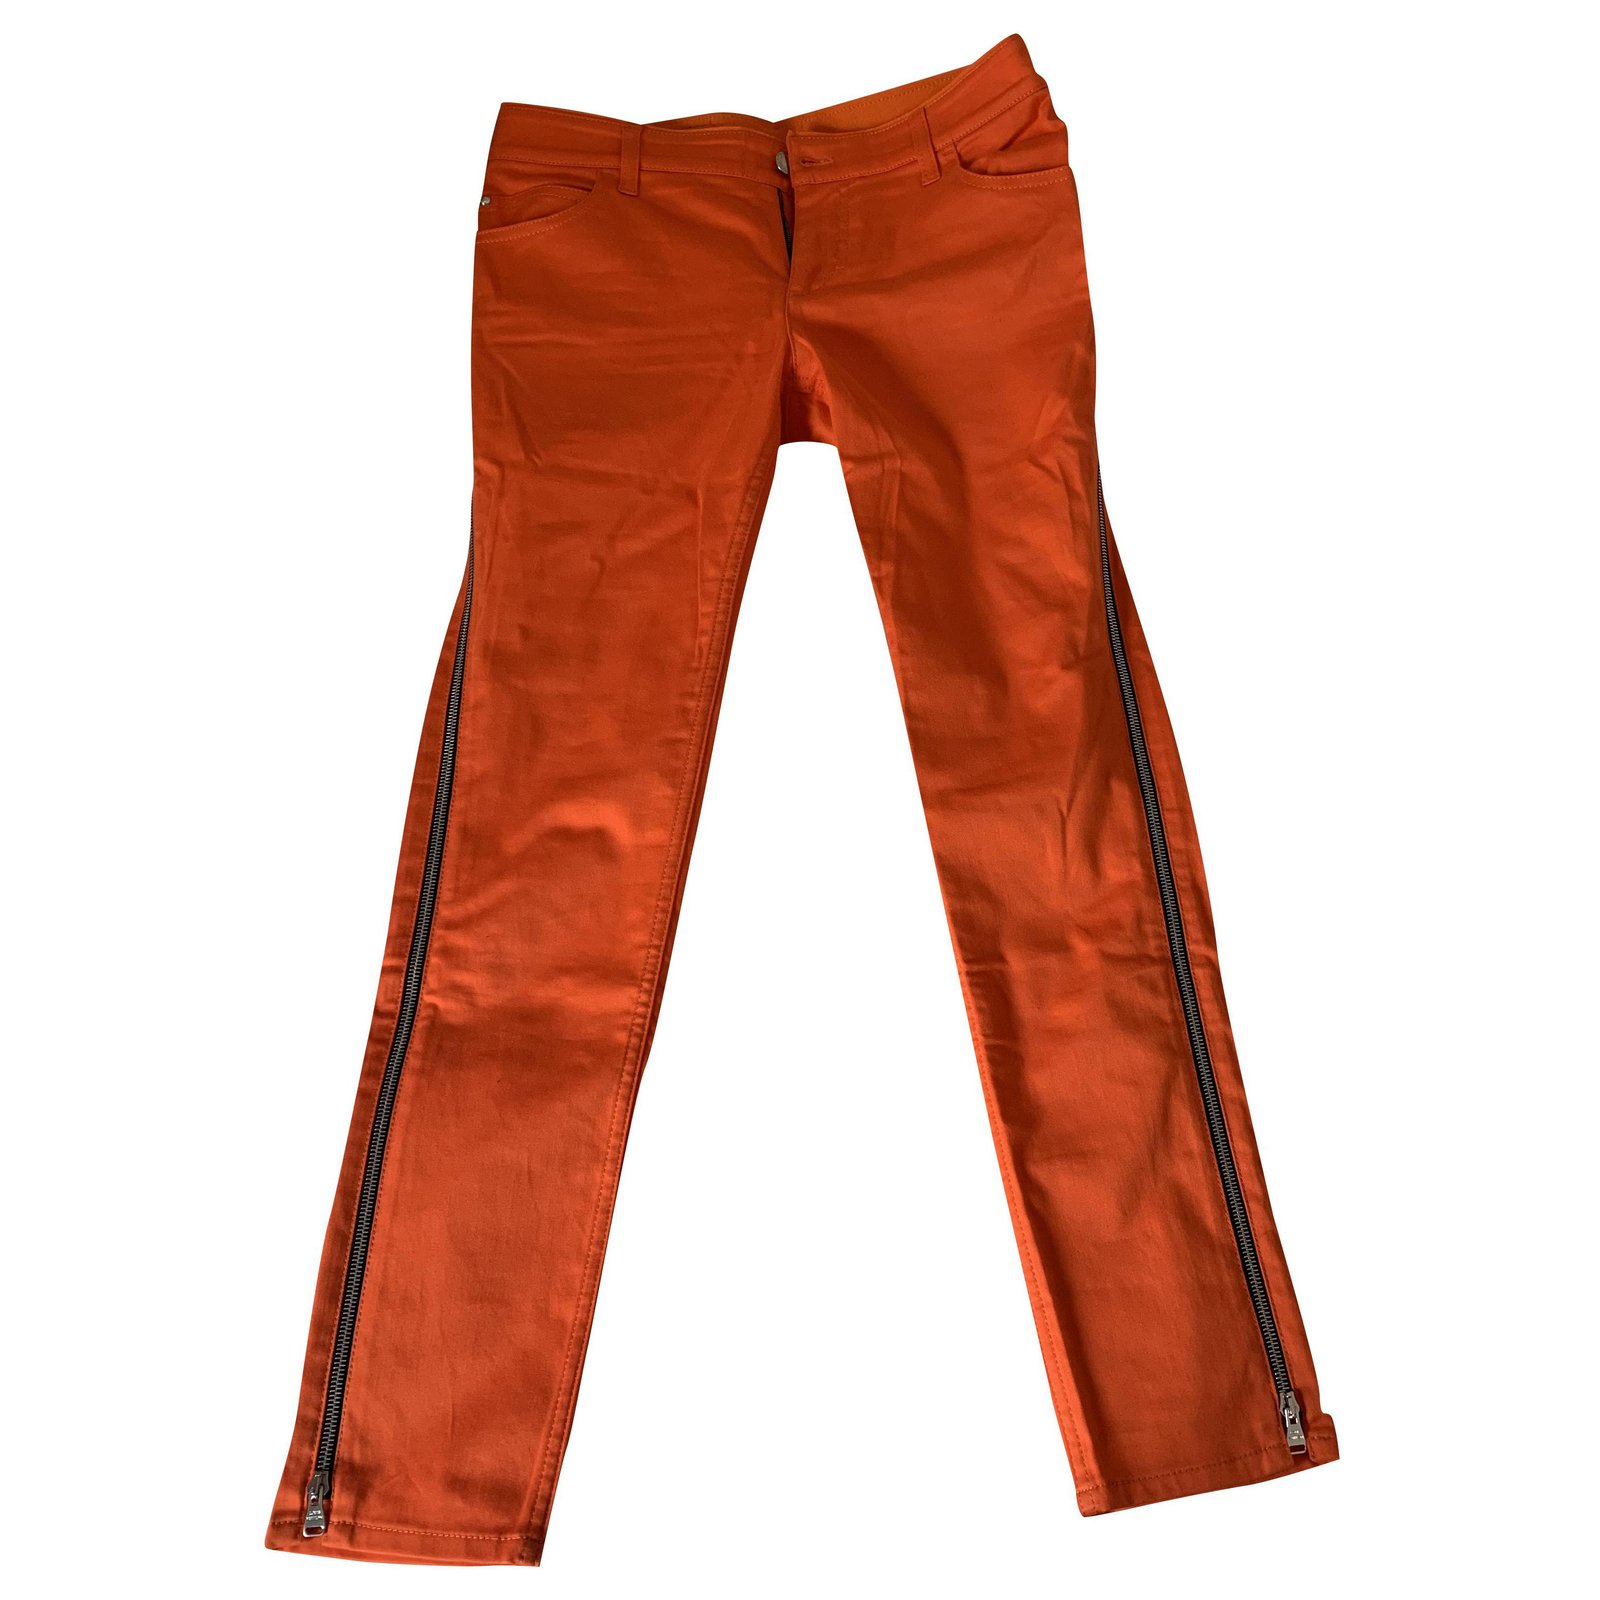 https://cdn1.jolicloset.com/imgr/full/2021/05/293041-1/louis-vuitton-orange-other-pants-leggings.jpg